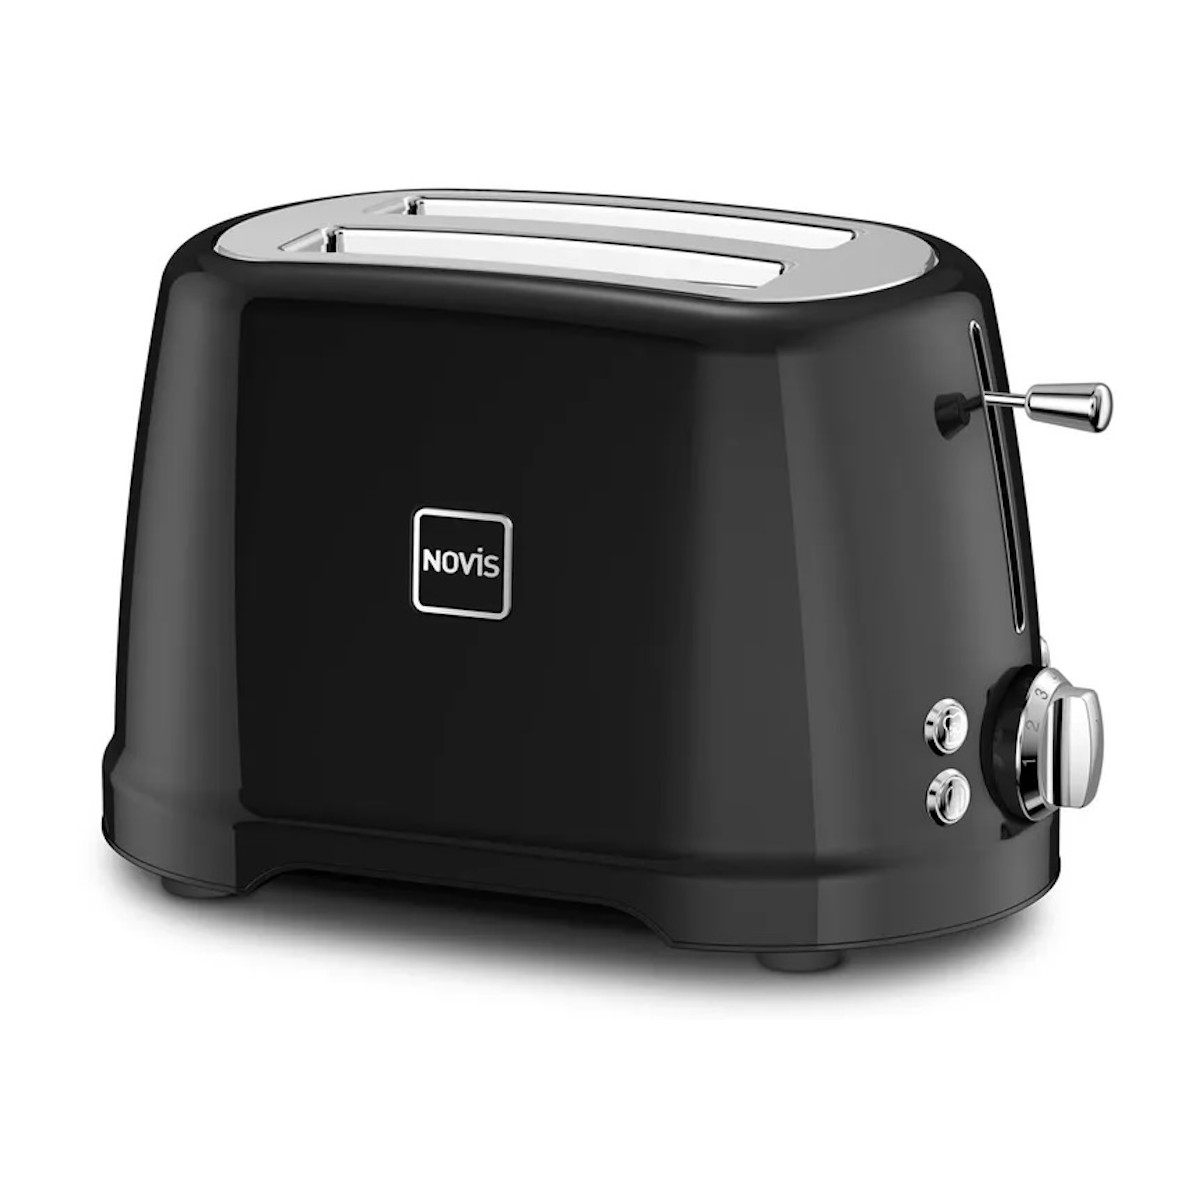 NOVIS T2 toaster - black